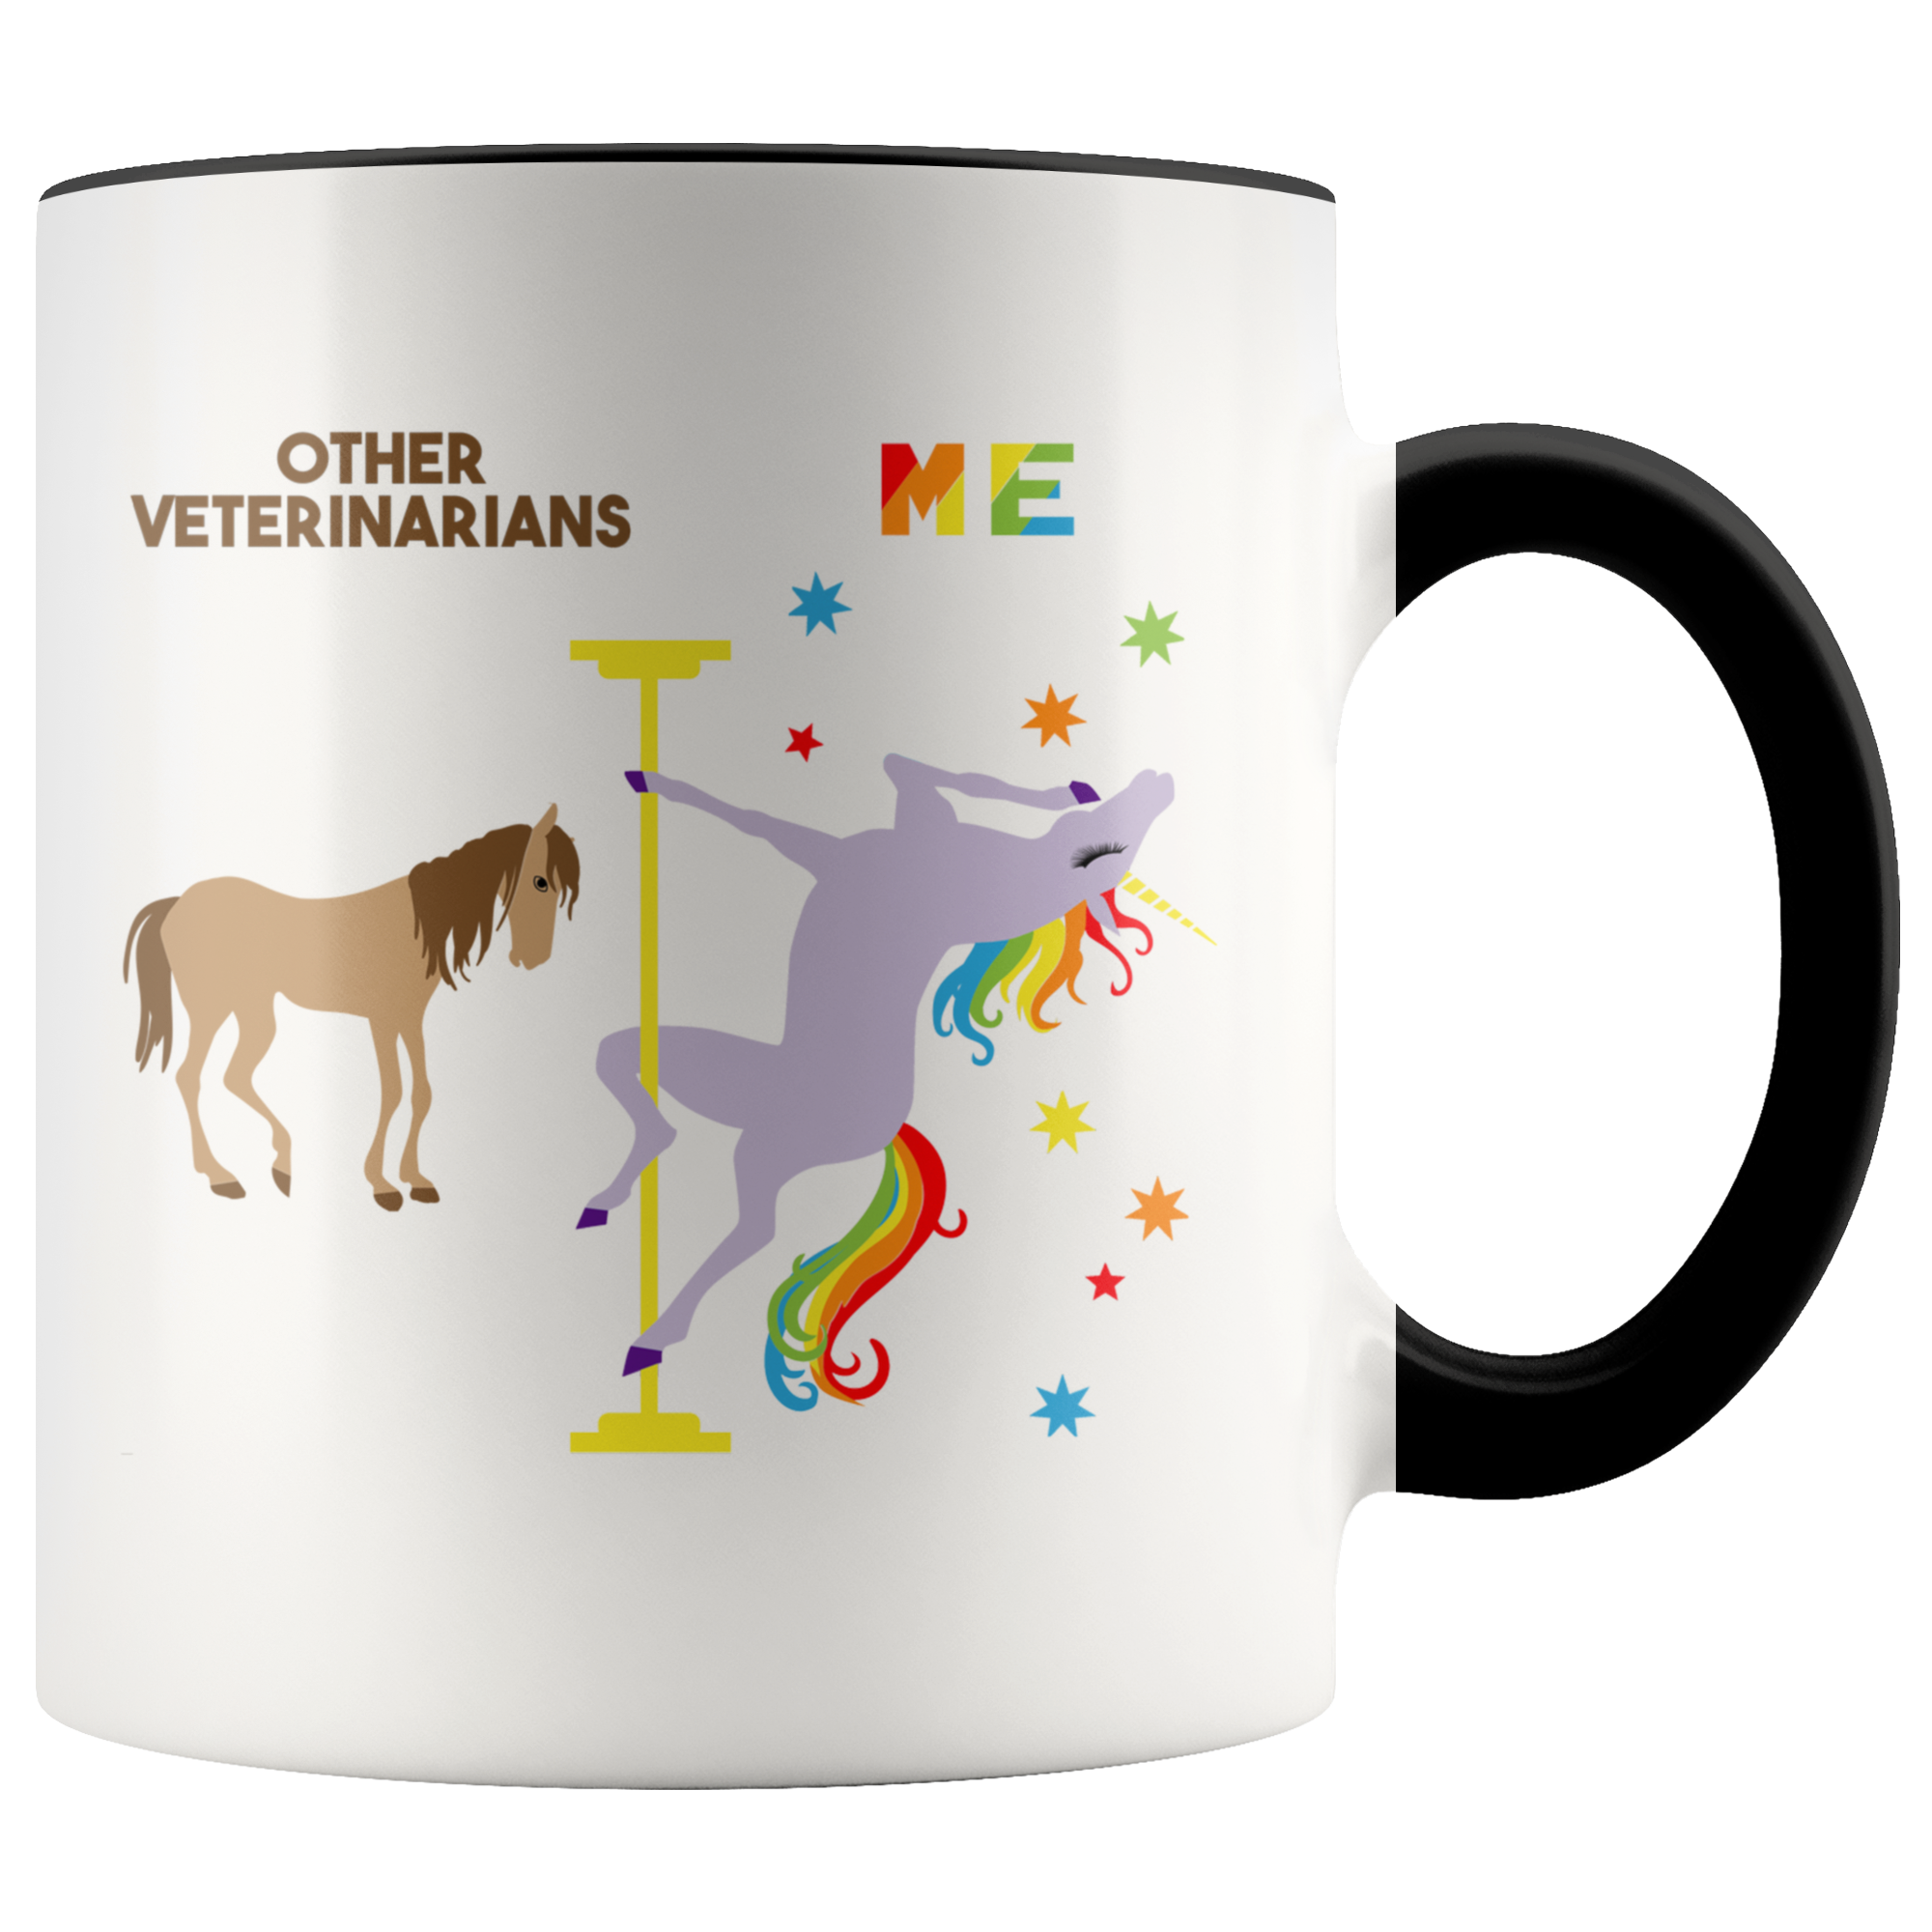 Veterinarian Gift for Veterinarians Mug Funny Veterinarian Retirement Gift Graduation Gift Idea Coffee Cup Pole Dancing Unicorn